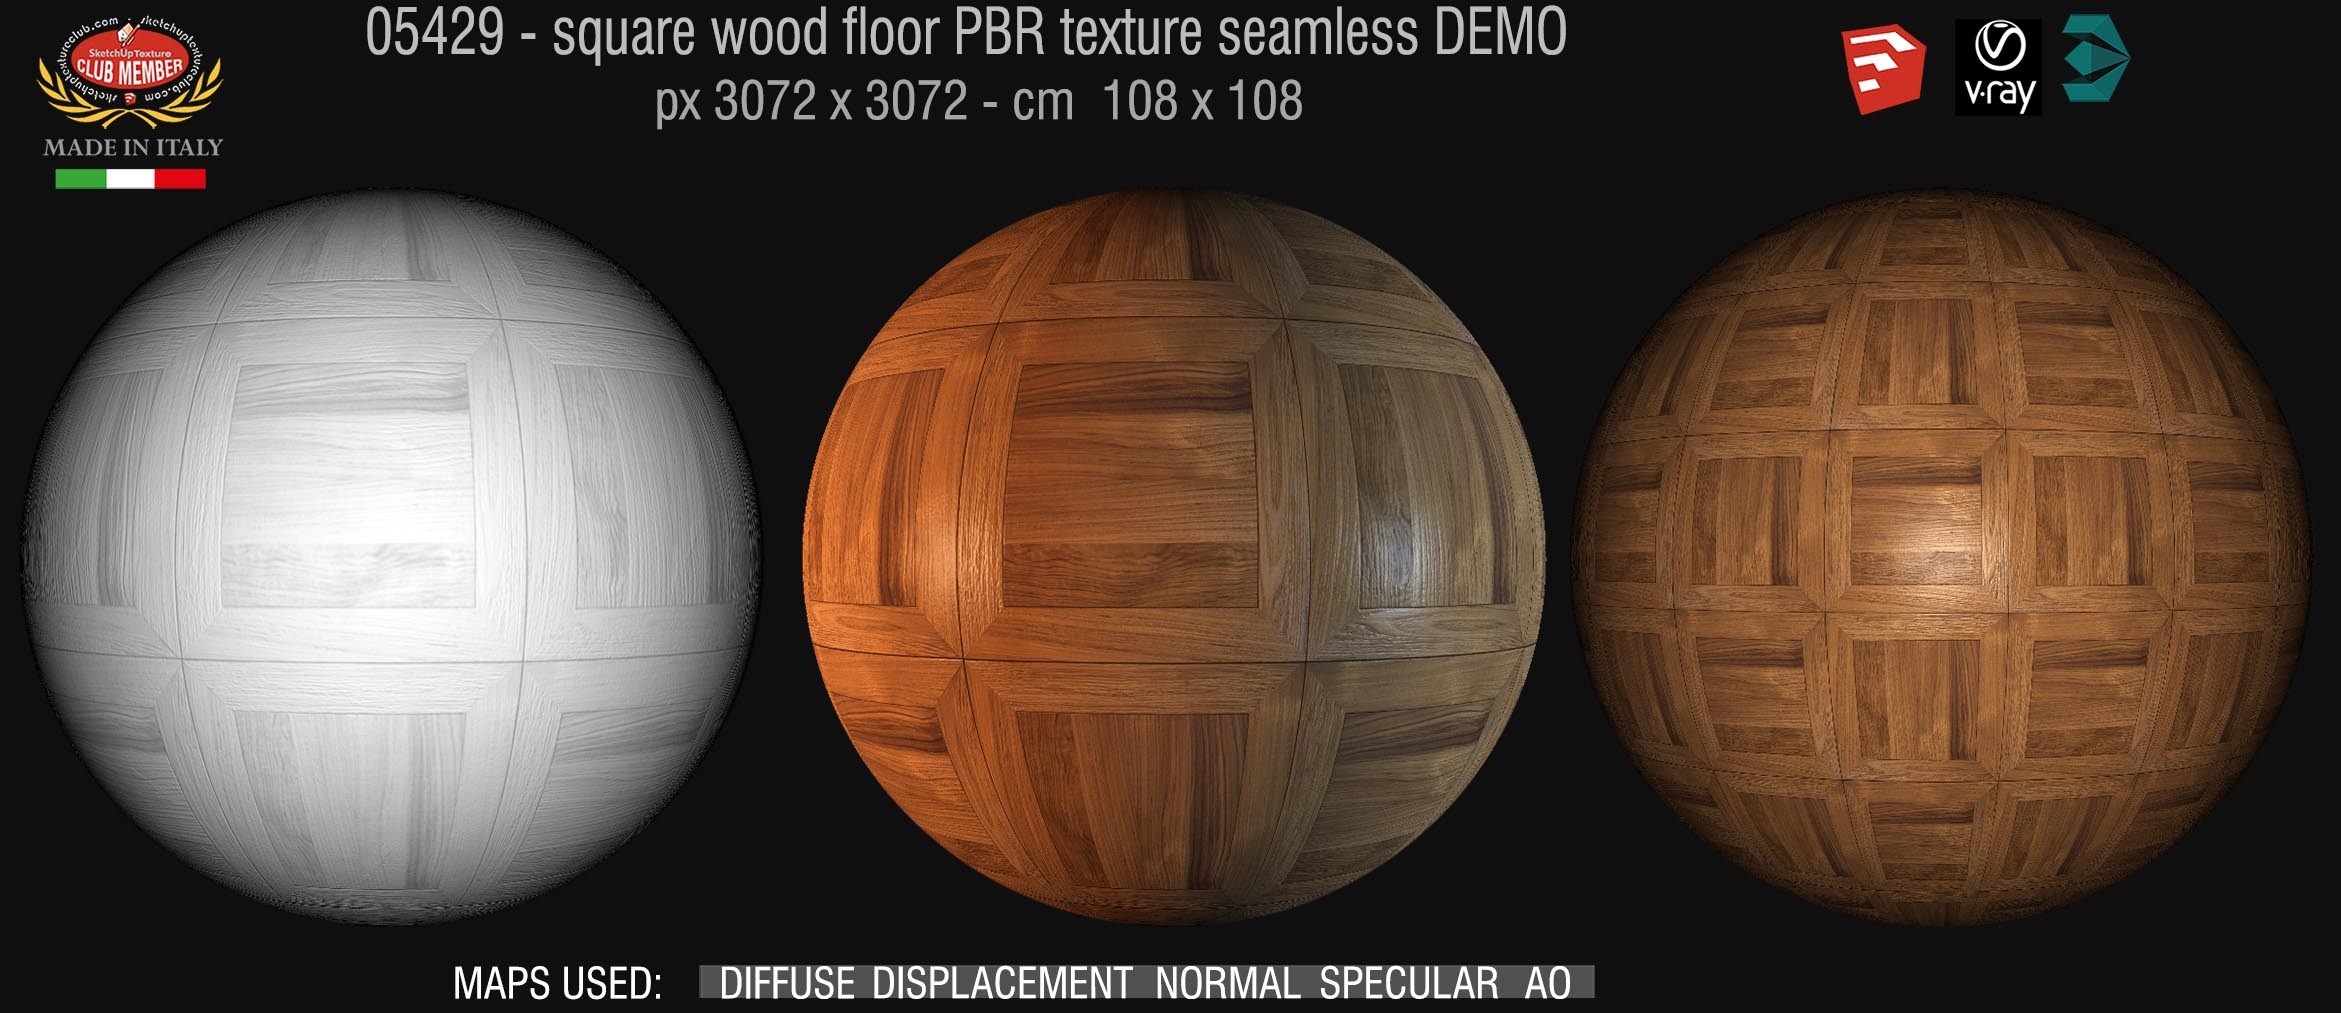 05429 square wood floor PBR texture seamless DEMO